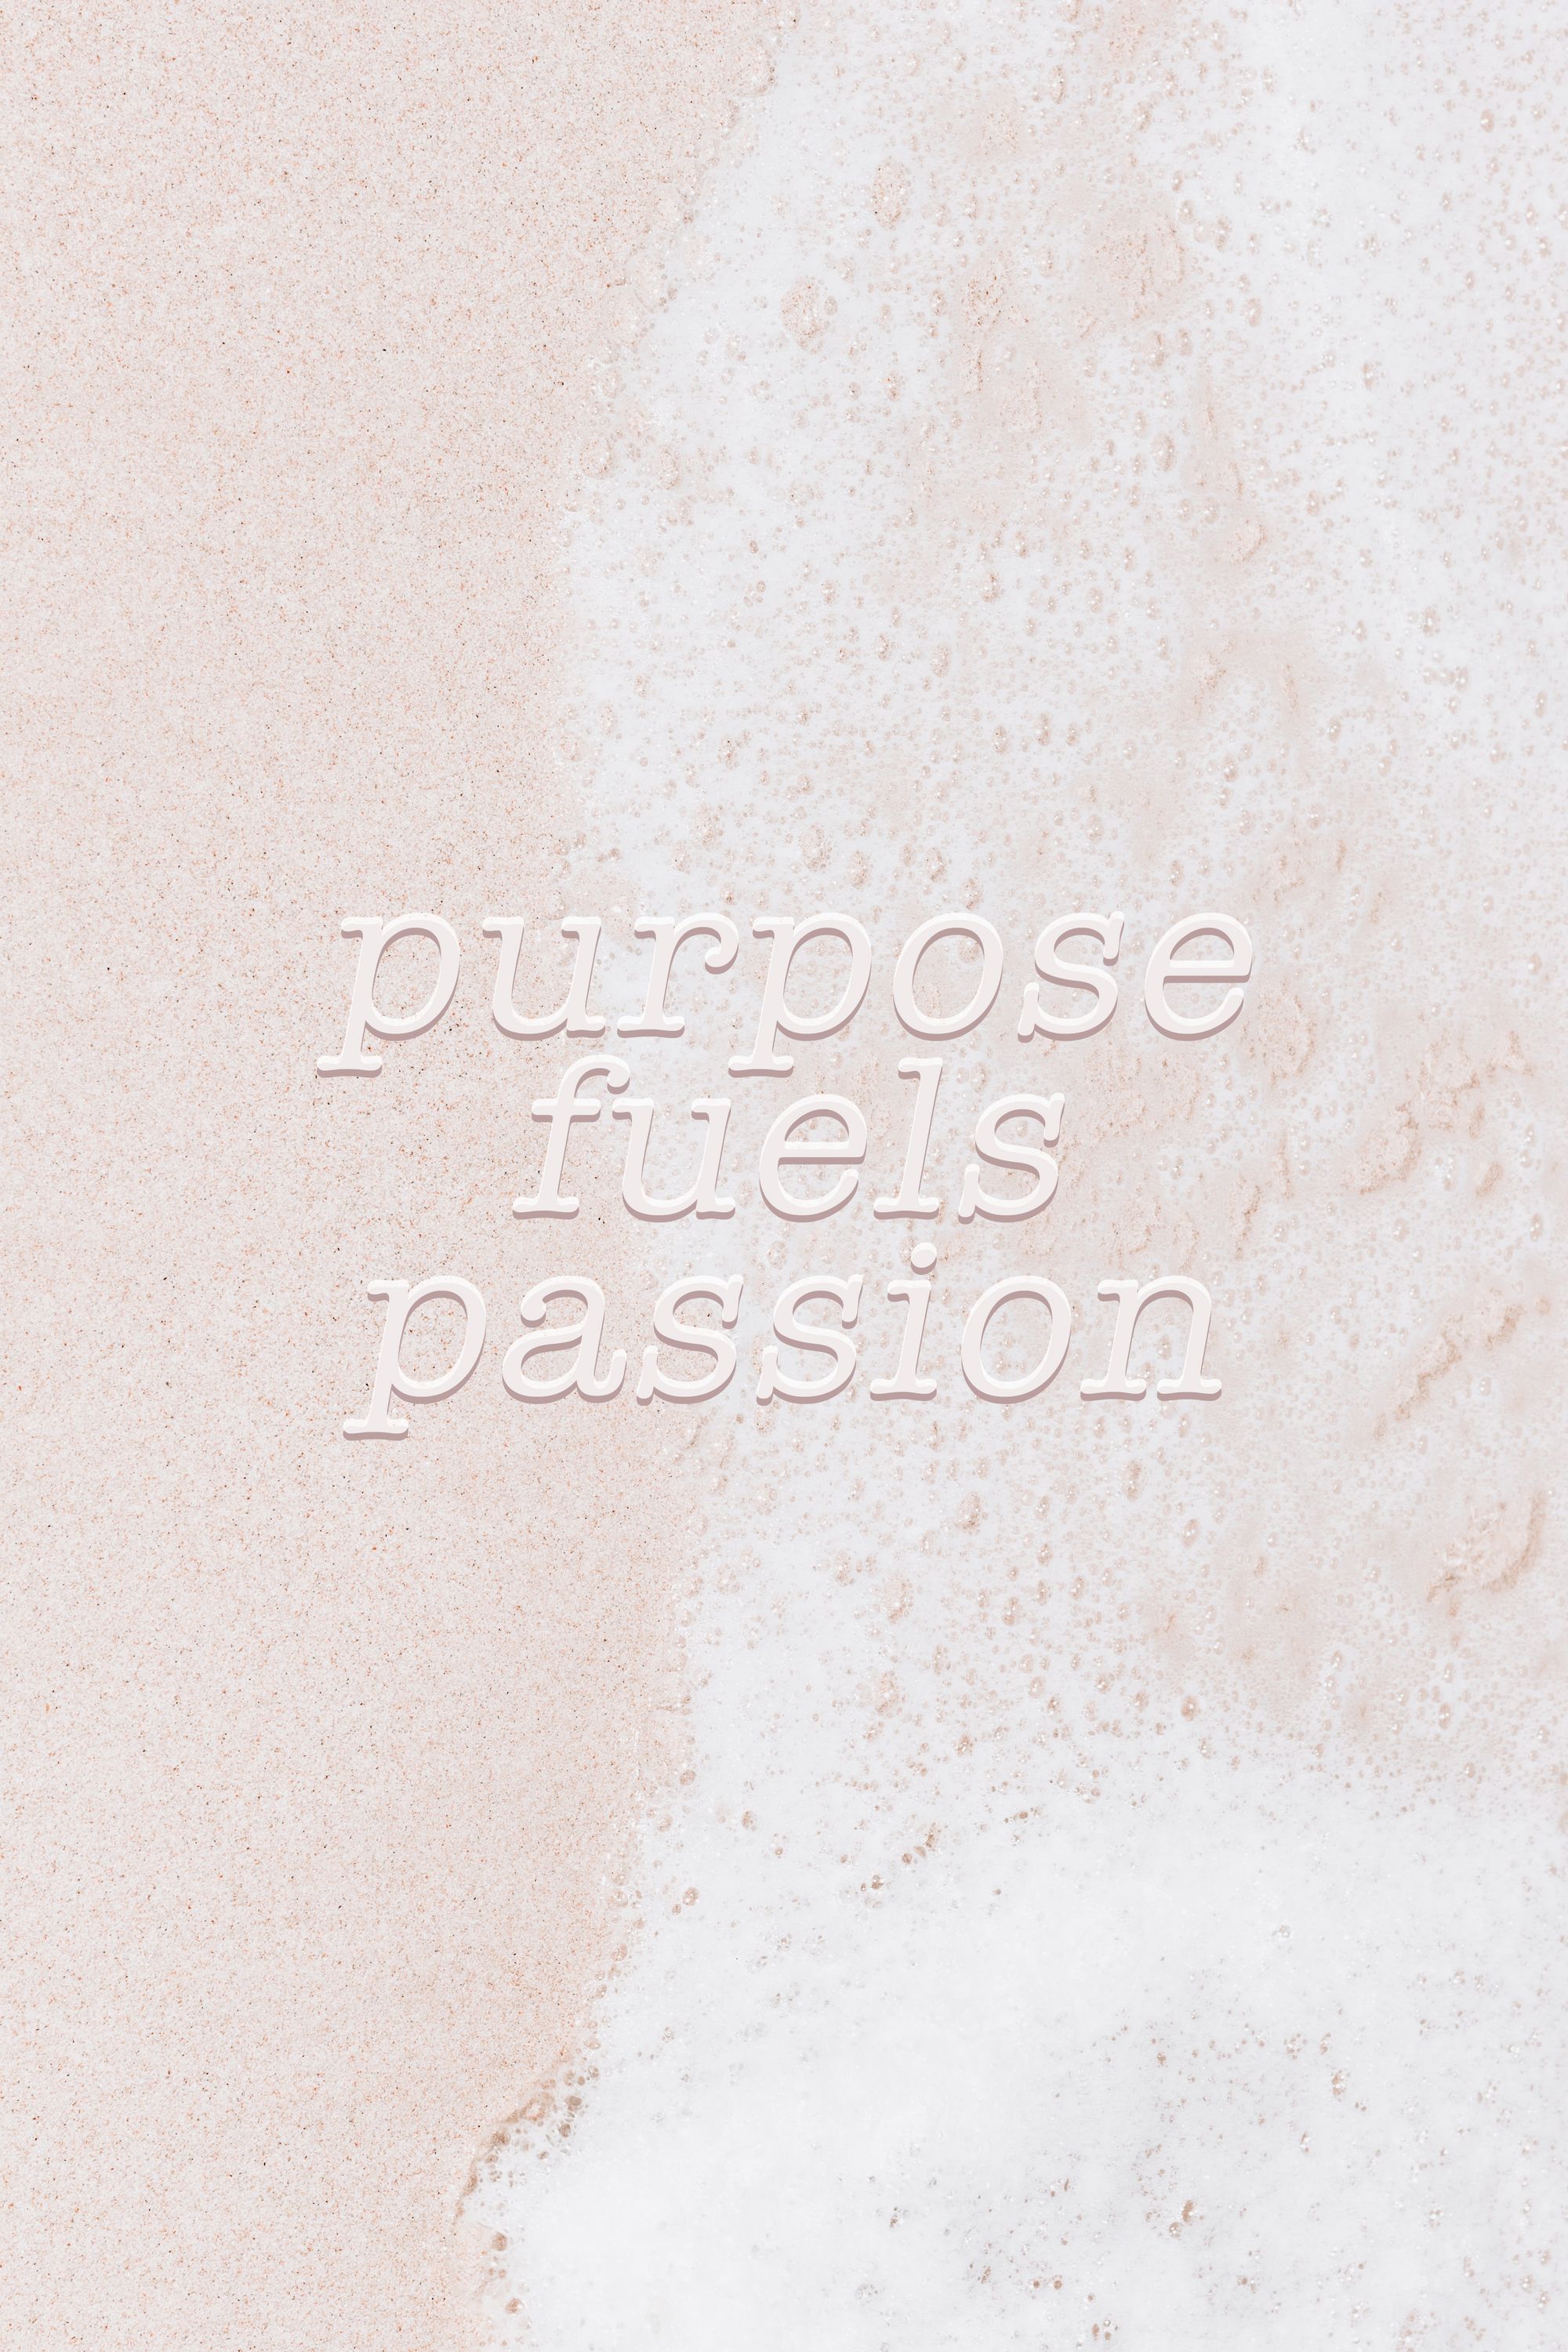 Define your purpose